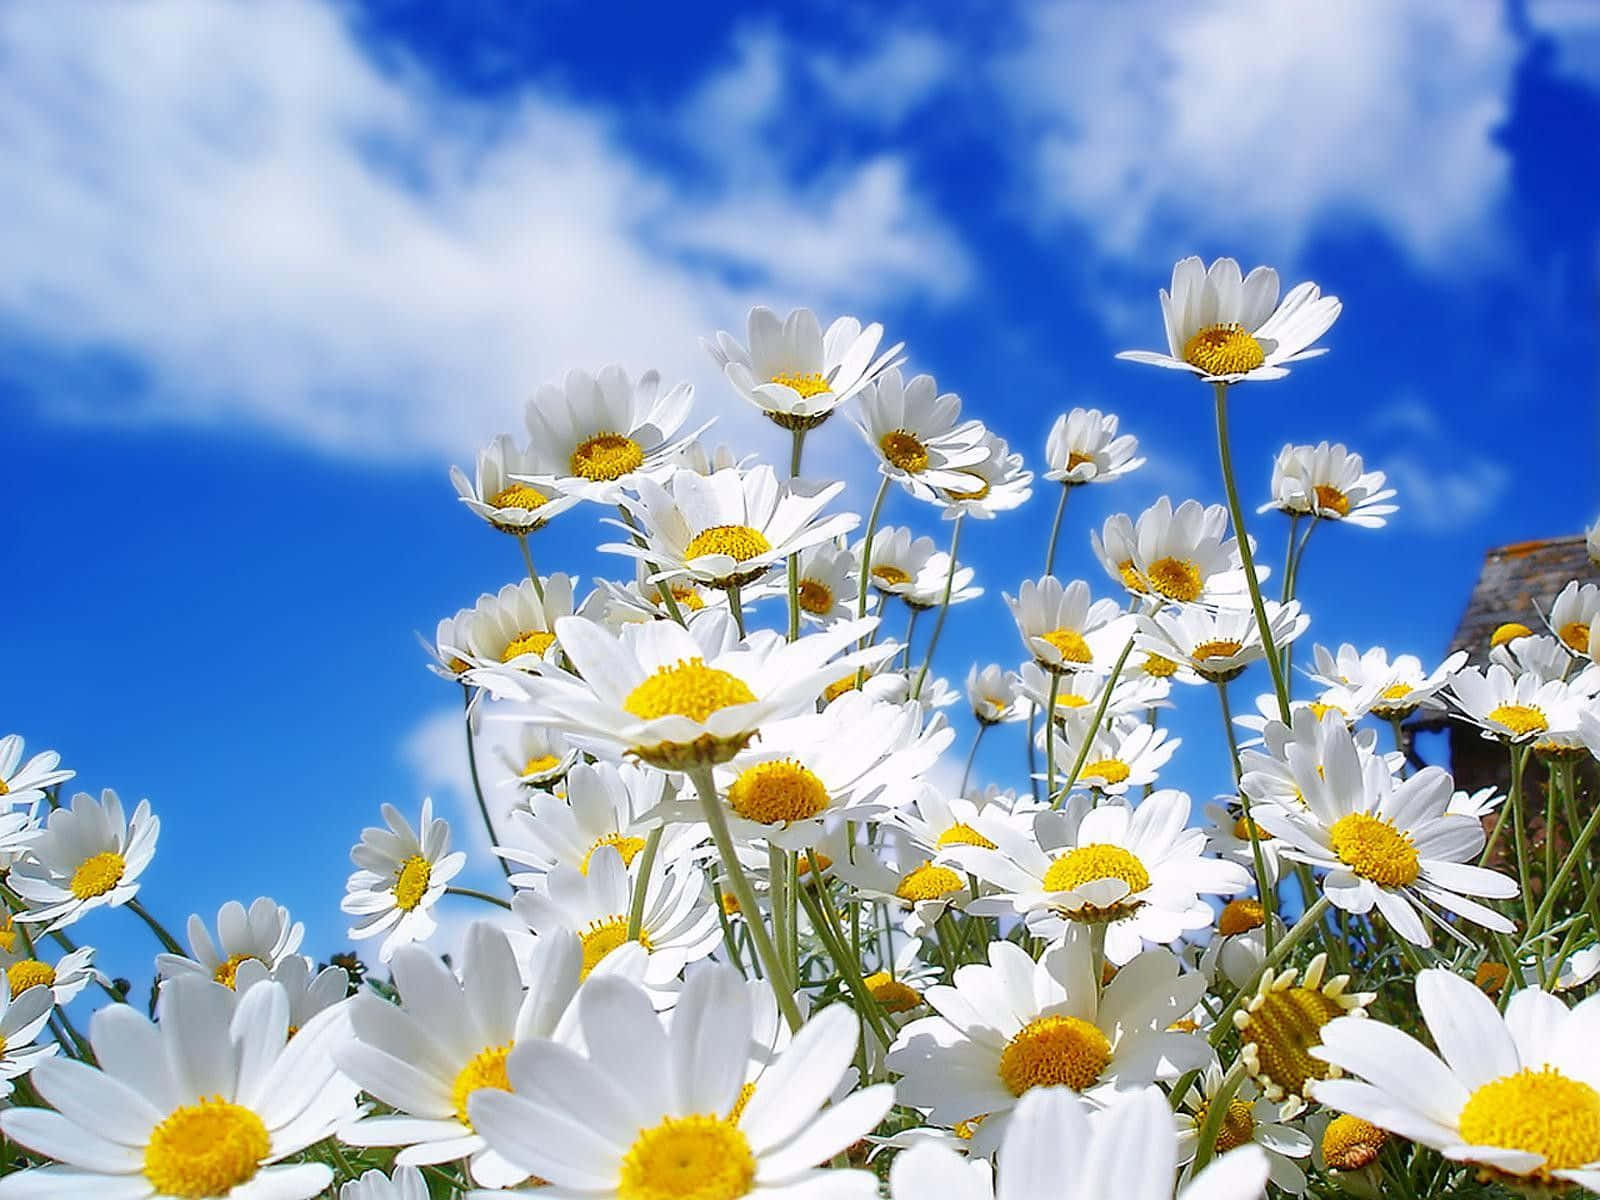 Free Spring Flowers Desktop Wallpaper Downloads, Spring Flowers Desktop Wallpaper for FREE